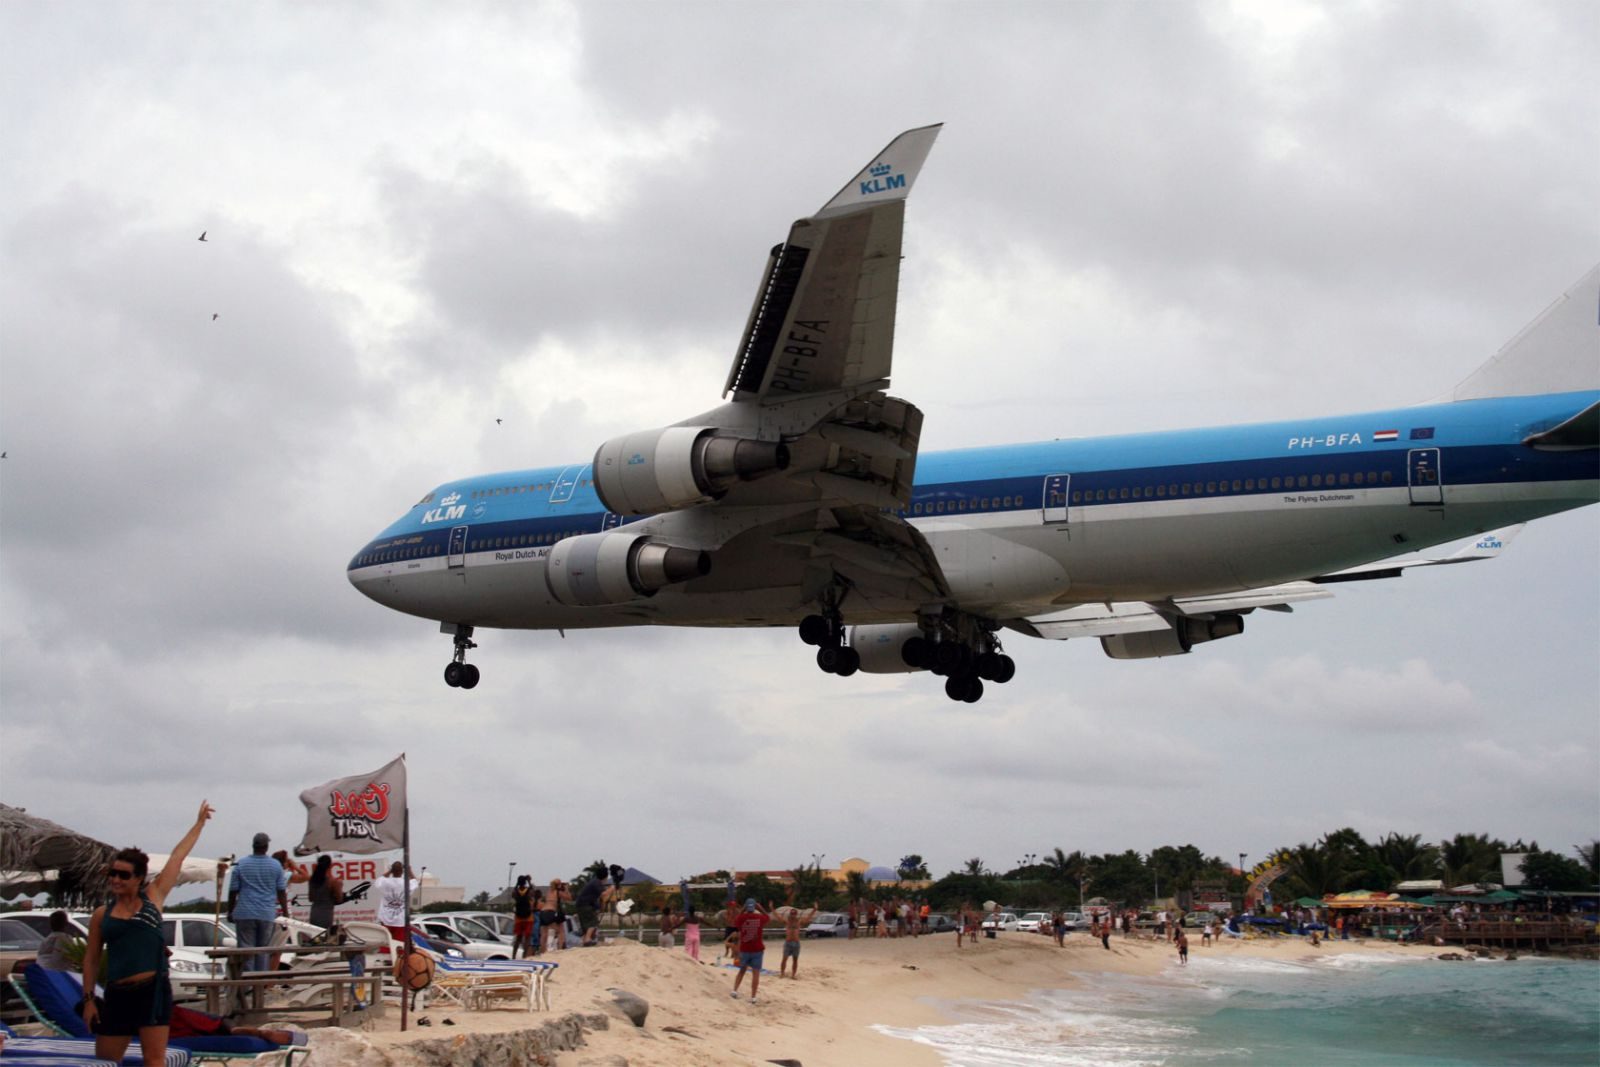 klm-747-landing-over-beach